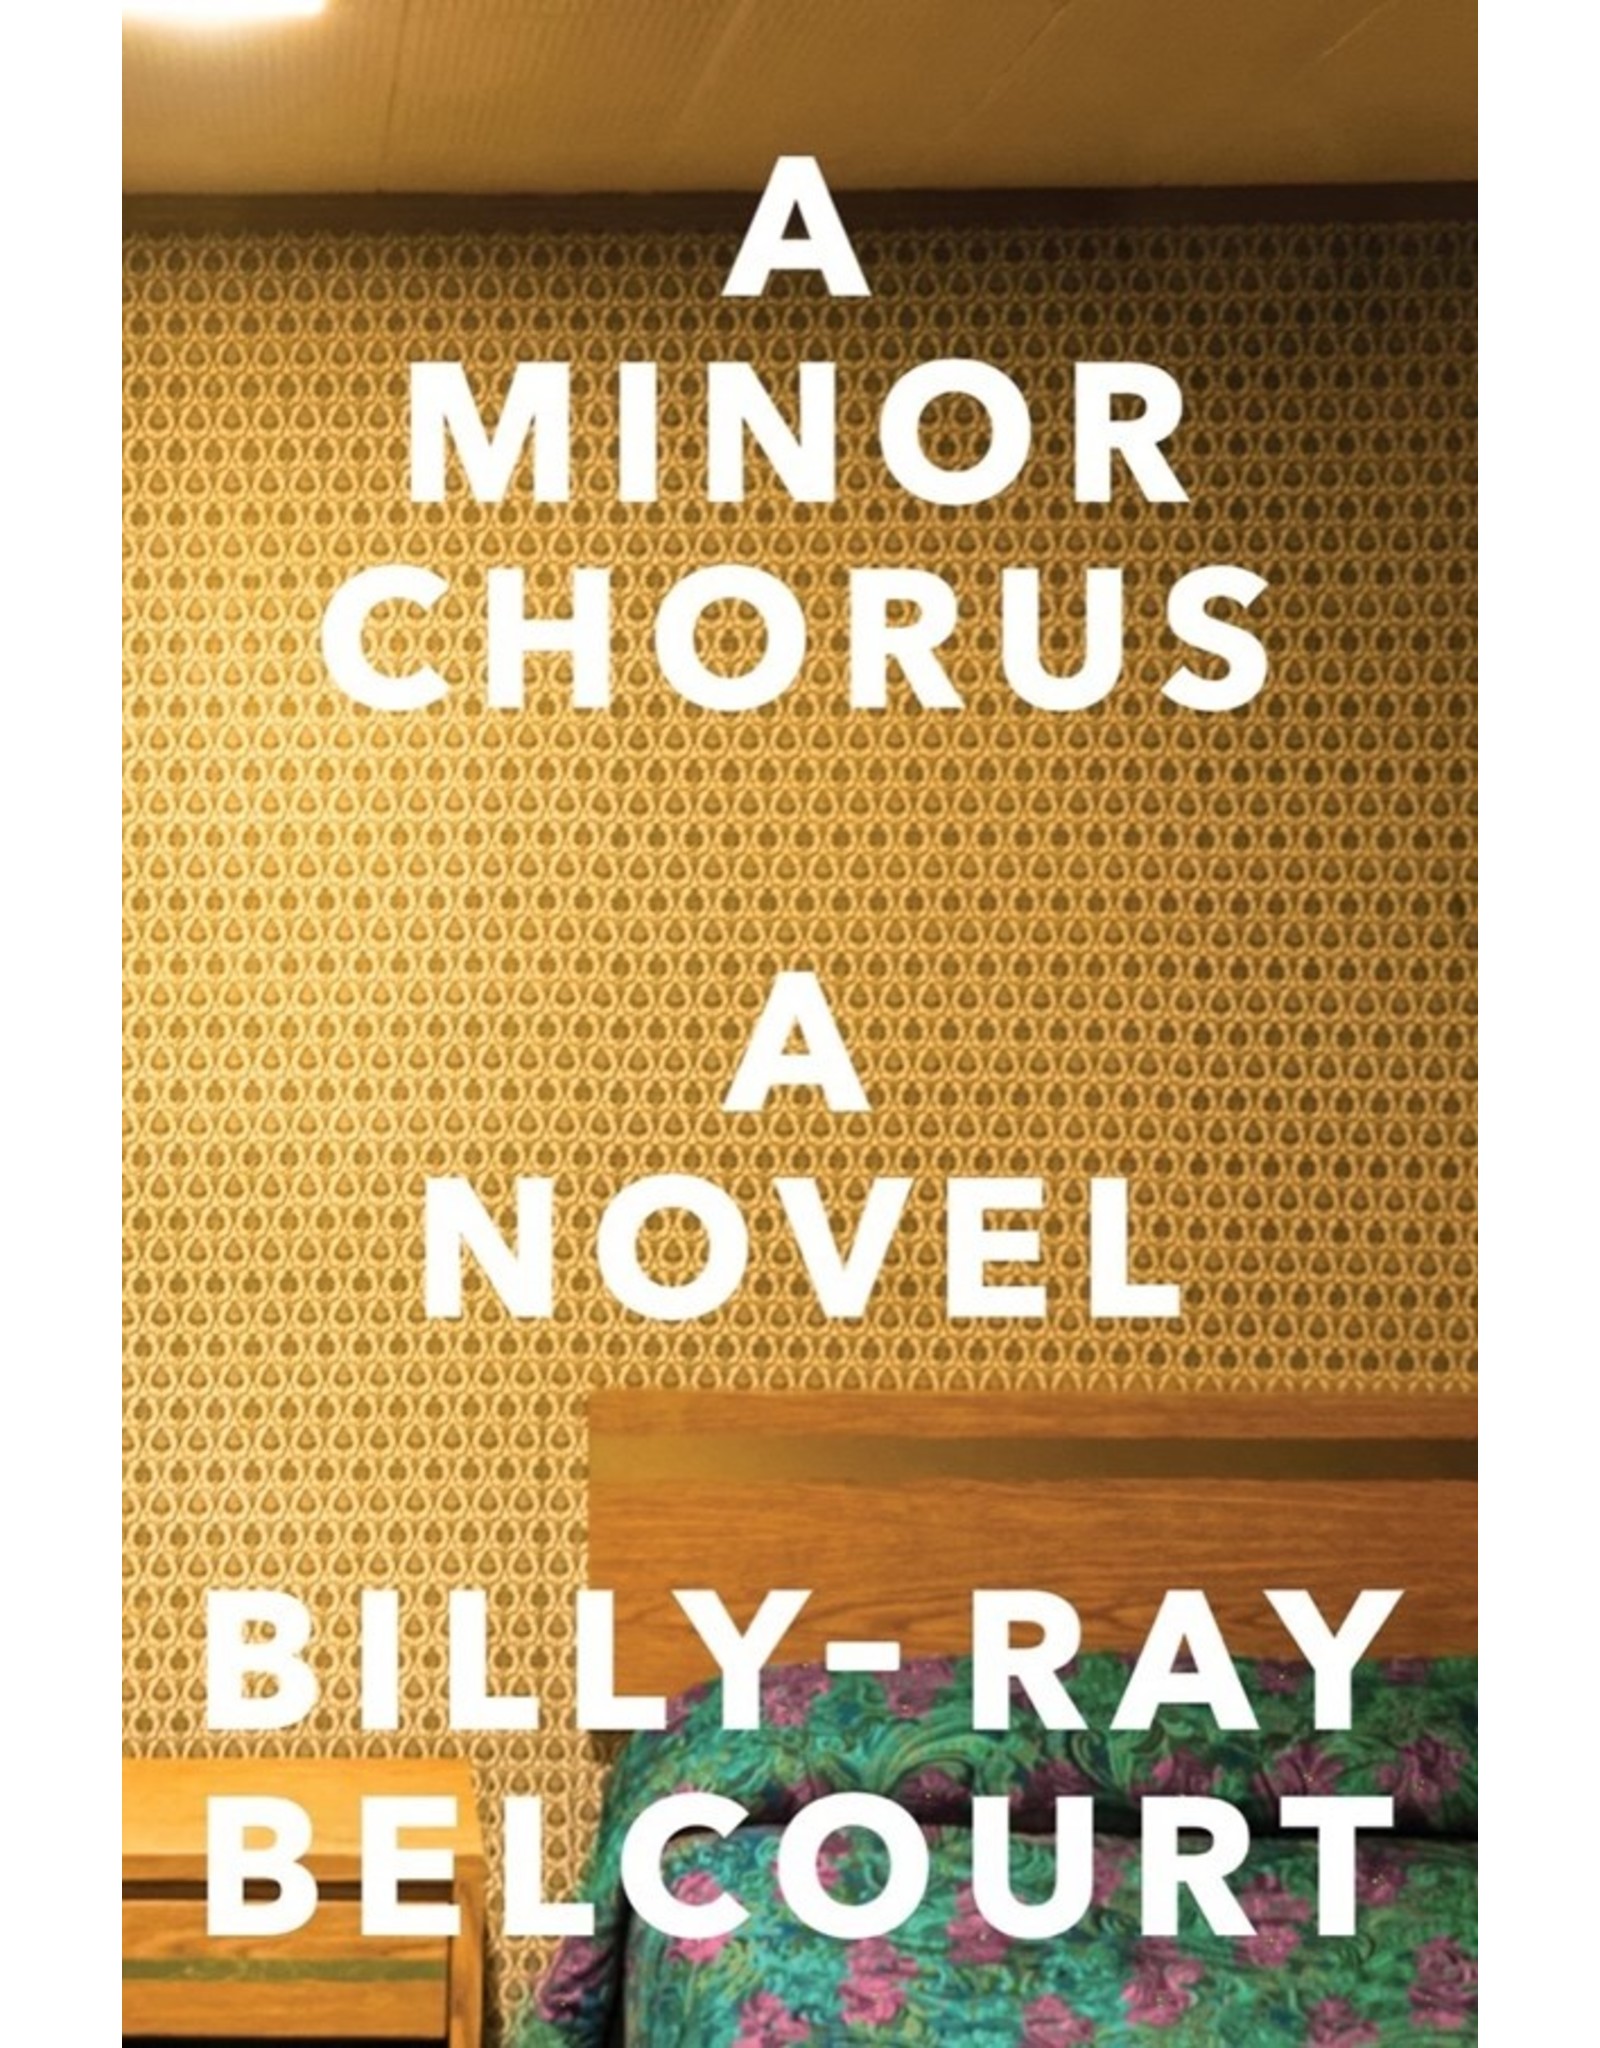 Books A minor Chorus: A Novel by Billy-Ray Belcourt